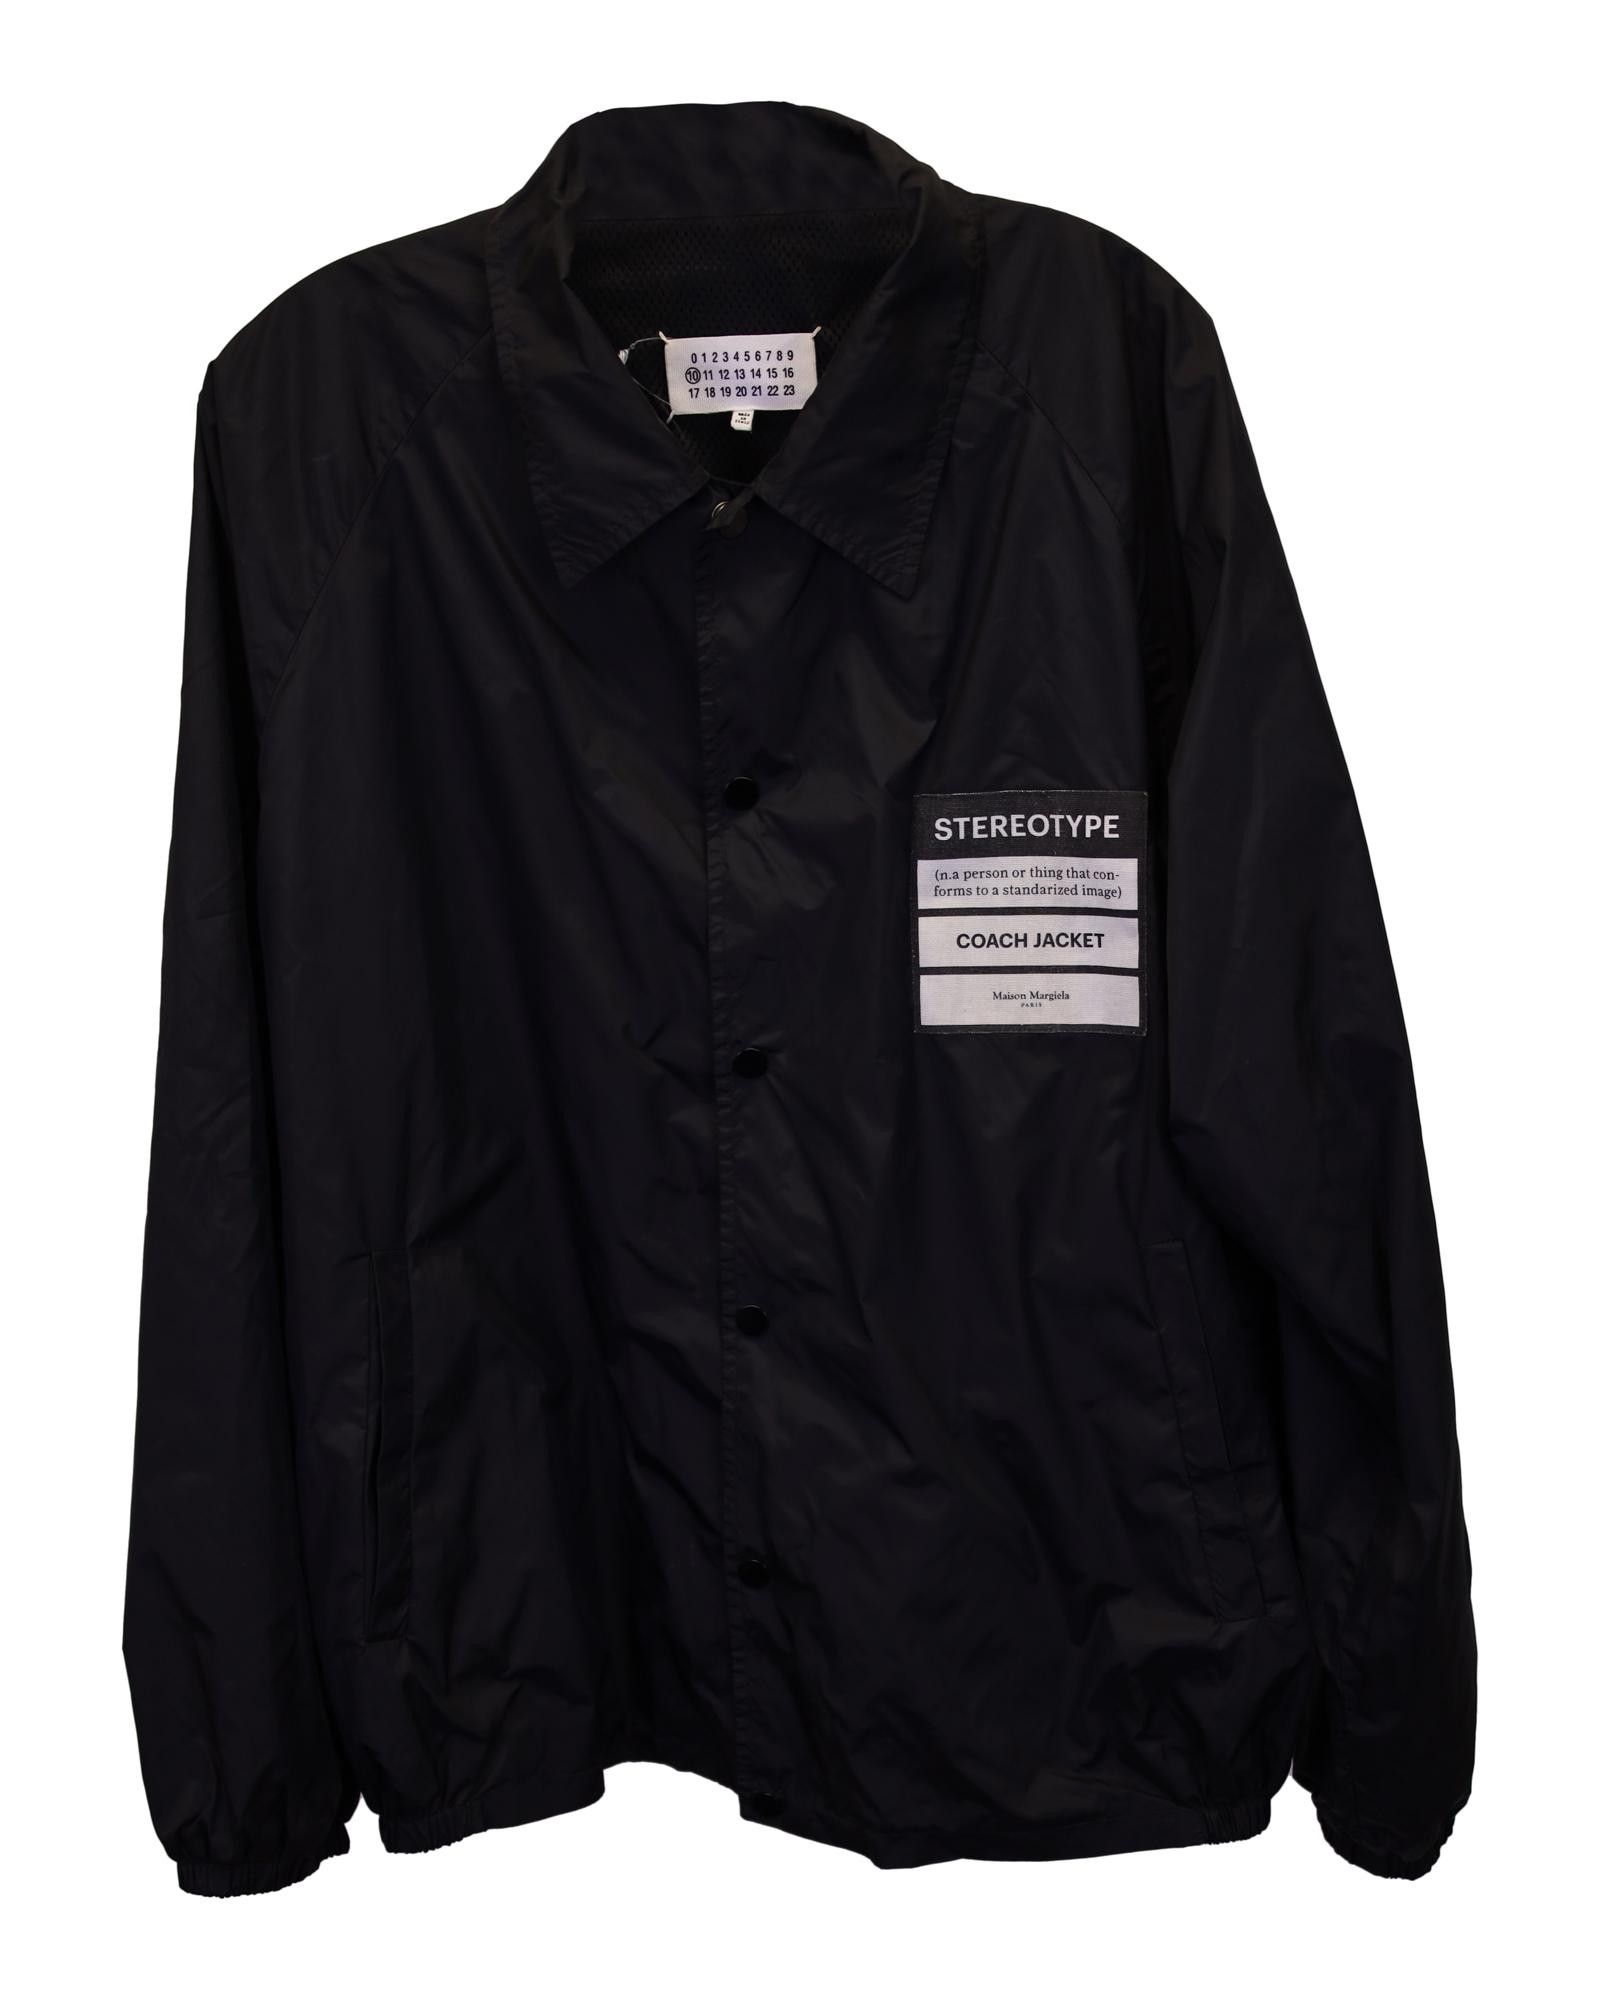 Maison Margiela Artisanal '99 Black Painted Denim Jacket | Grailed